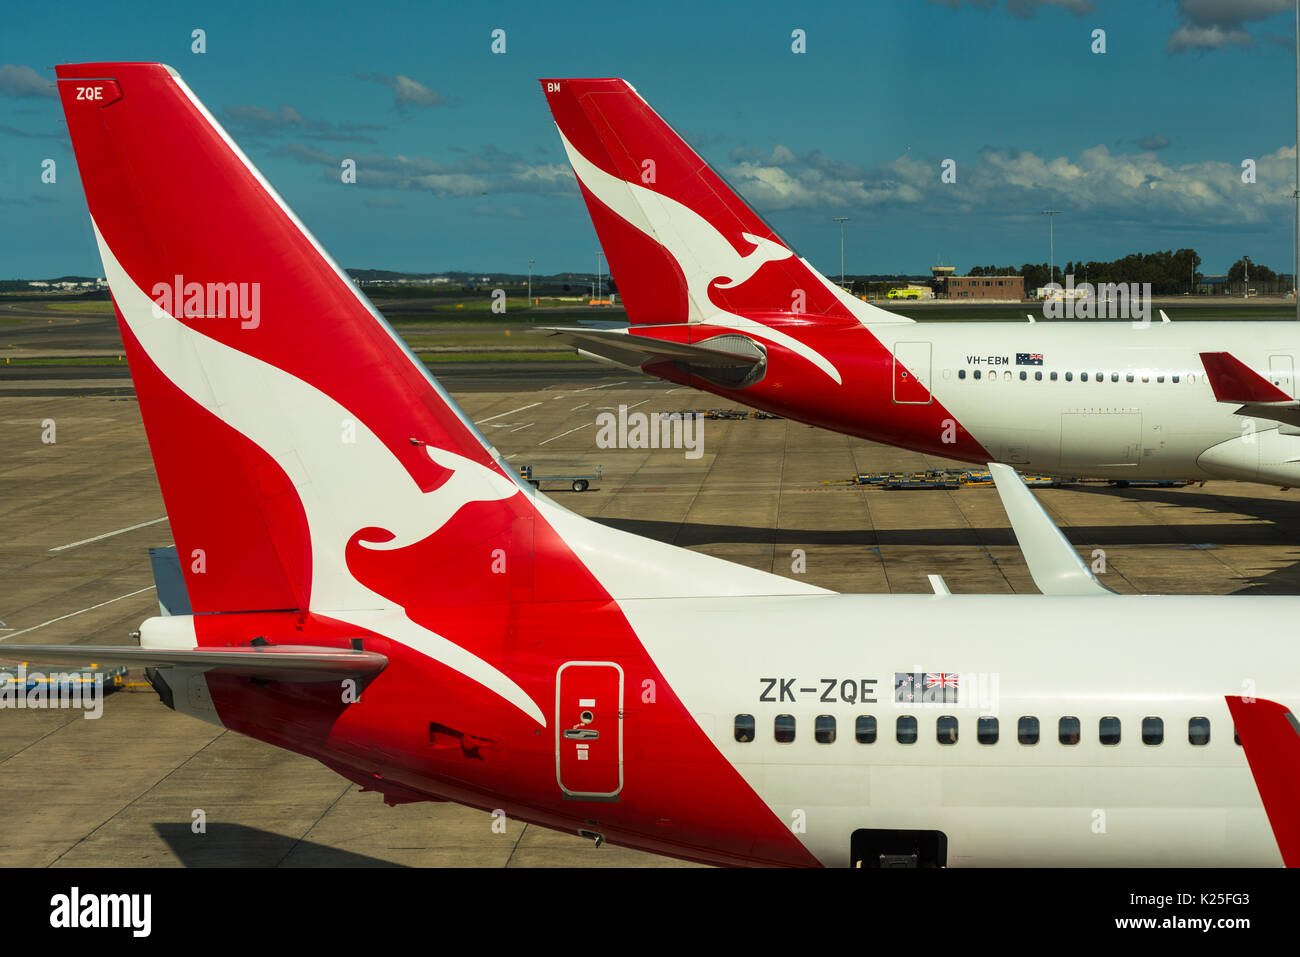 Qantas passenger aircraft tails with distinctive kangaroo logo at Sydney International Airport, New South Wales, Australia. Stock Photo